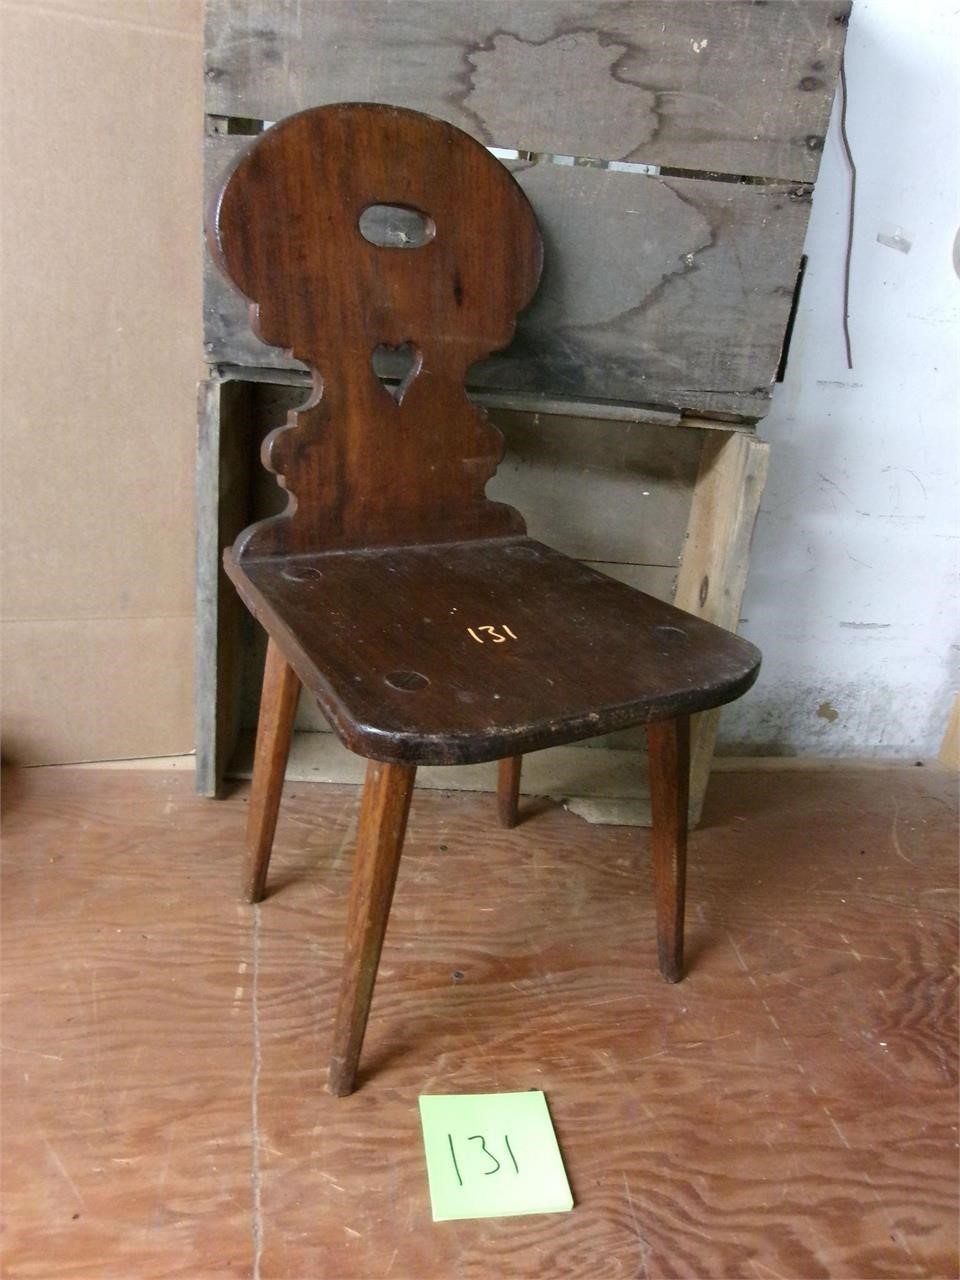 Vintage doll chair